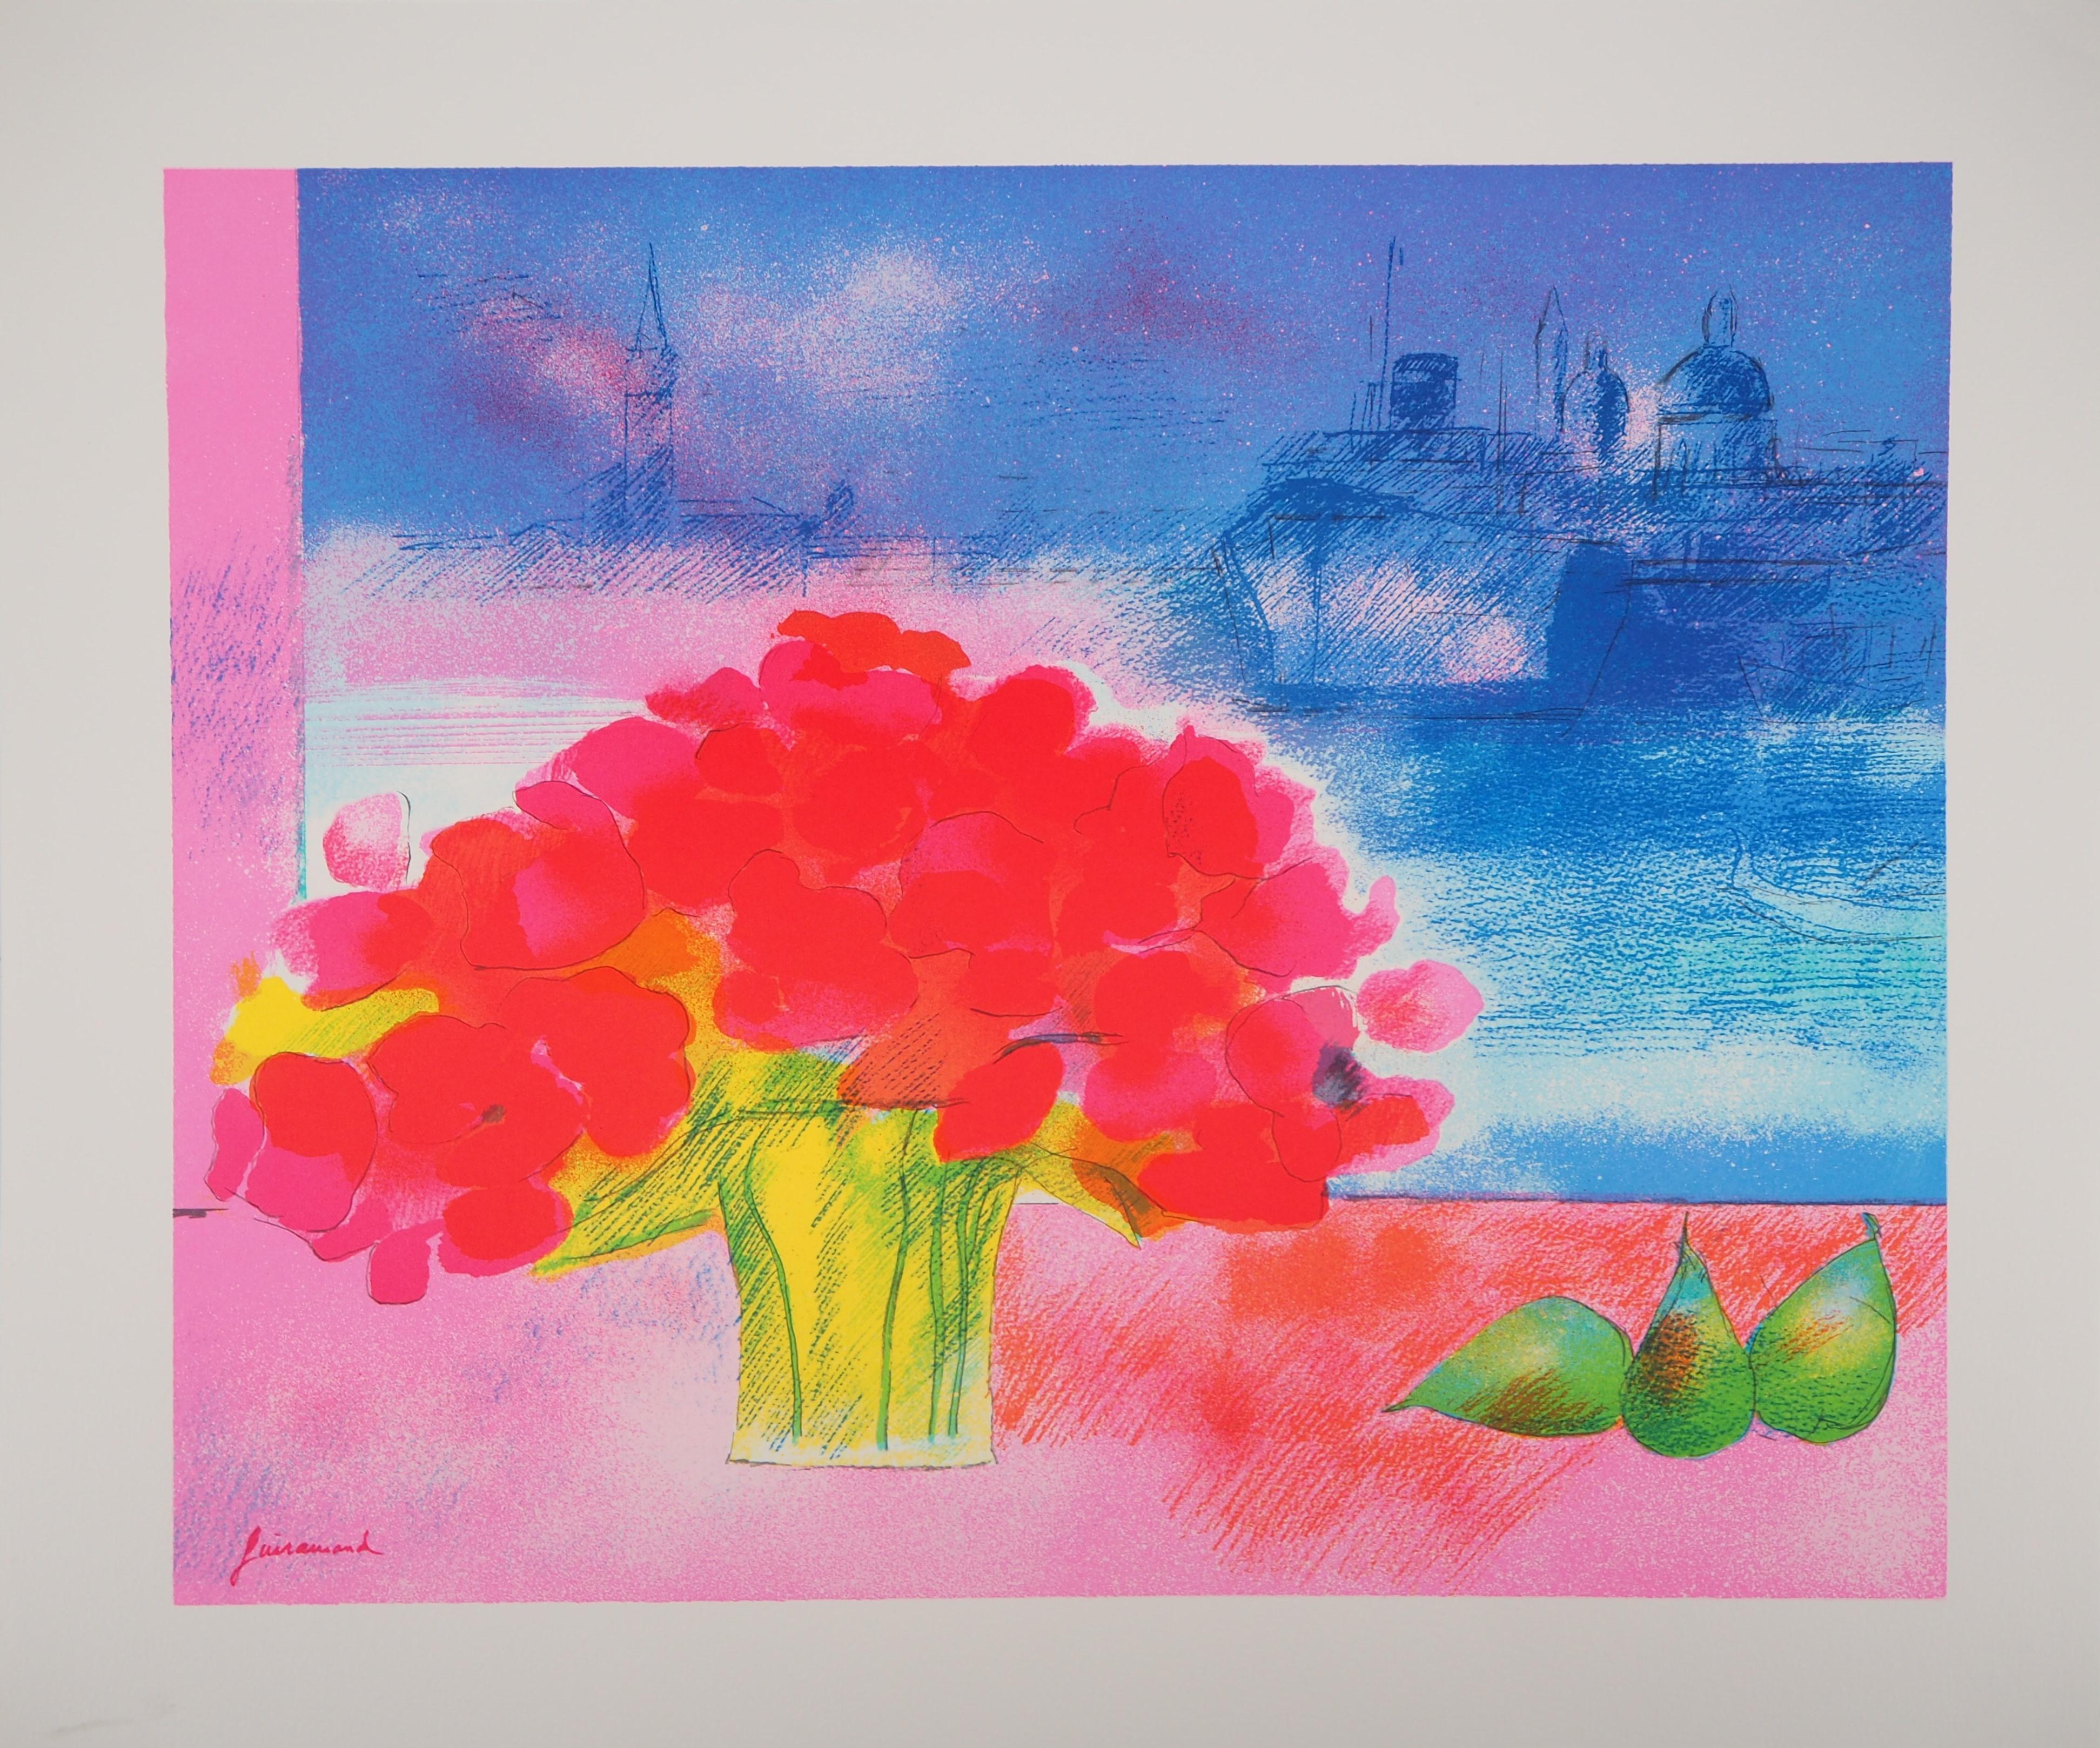 Italy : Venice, San Giorgio with Red Flowers - Original lithograph